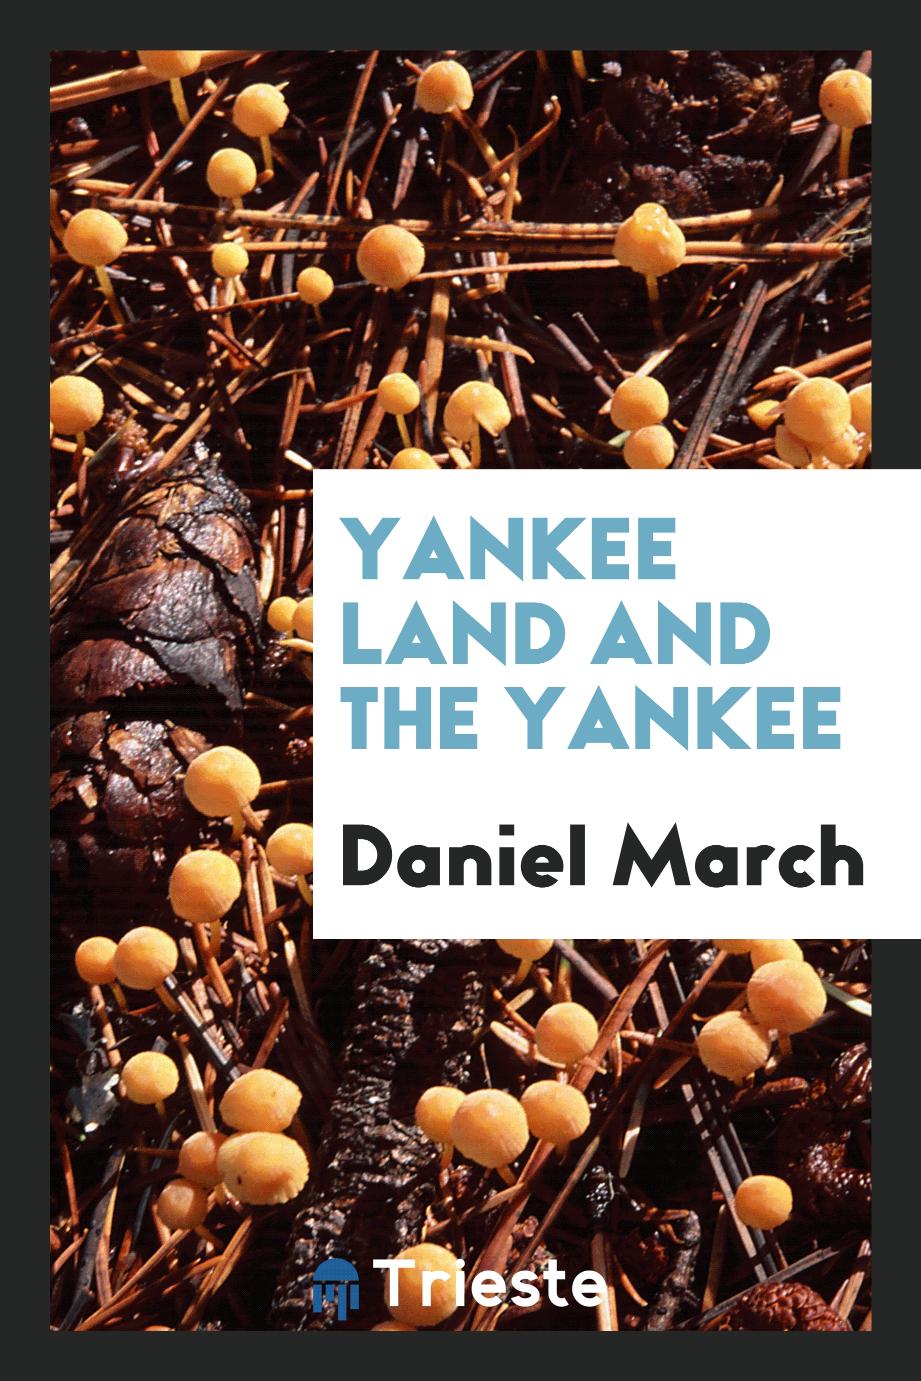 Yankee land and the Yankee